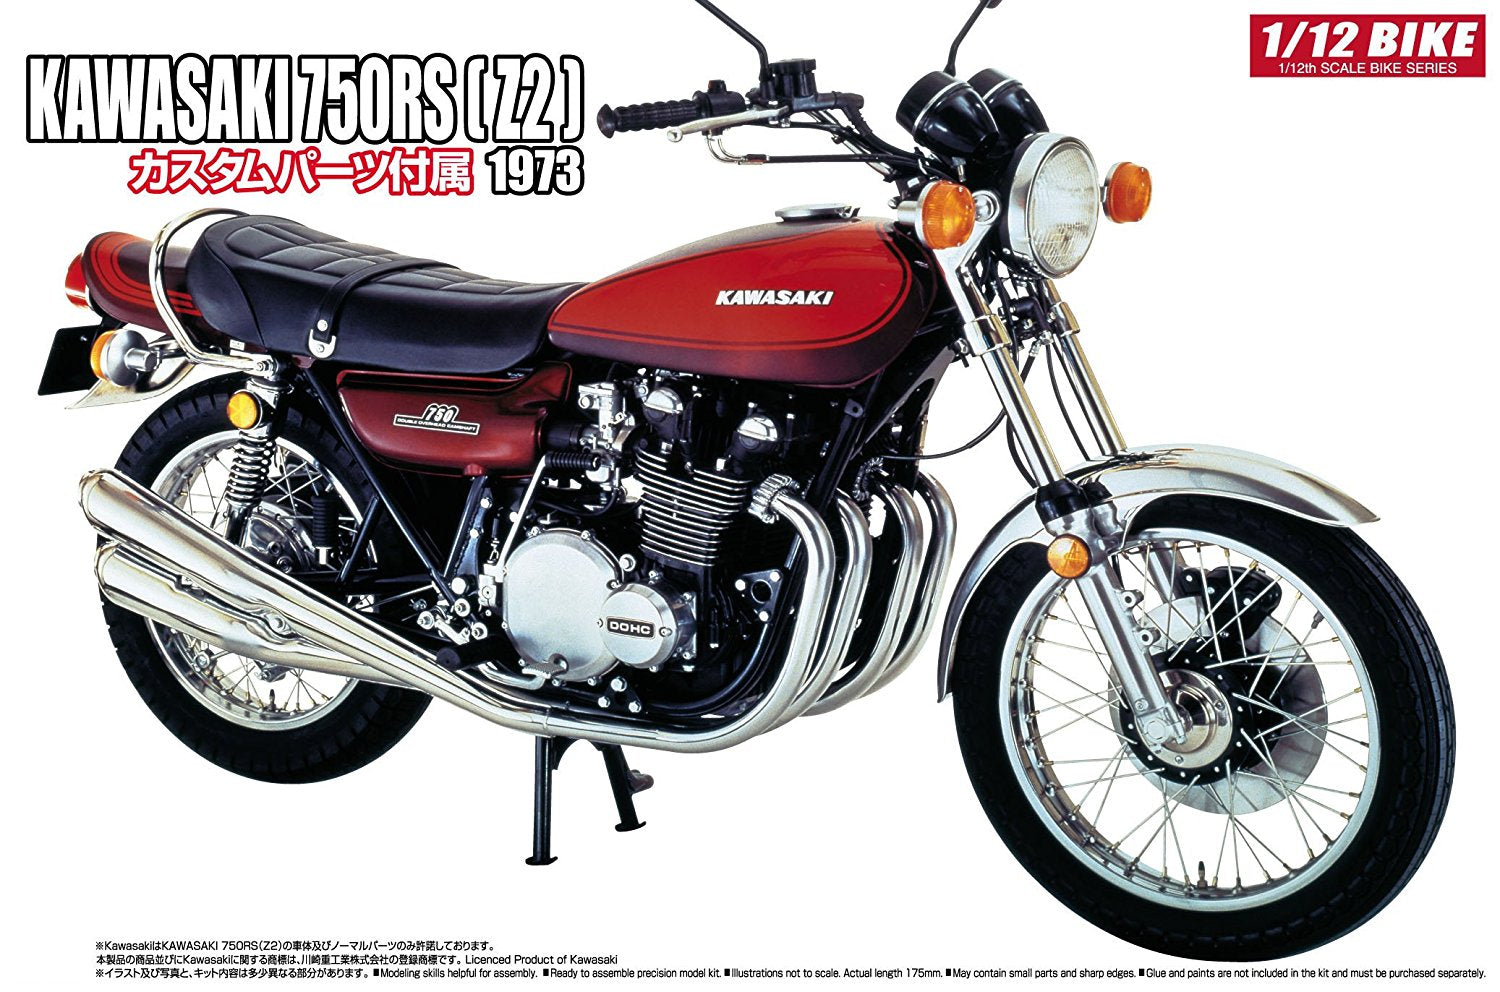 Kawasaki 750 RS (Z2)